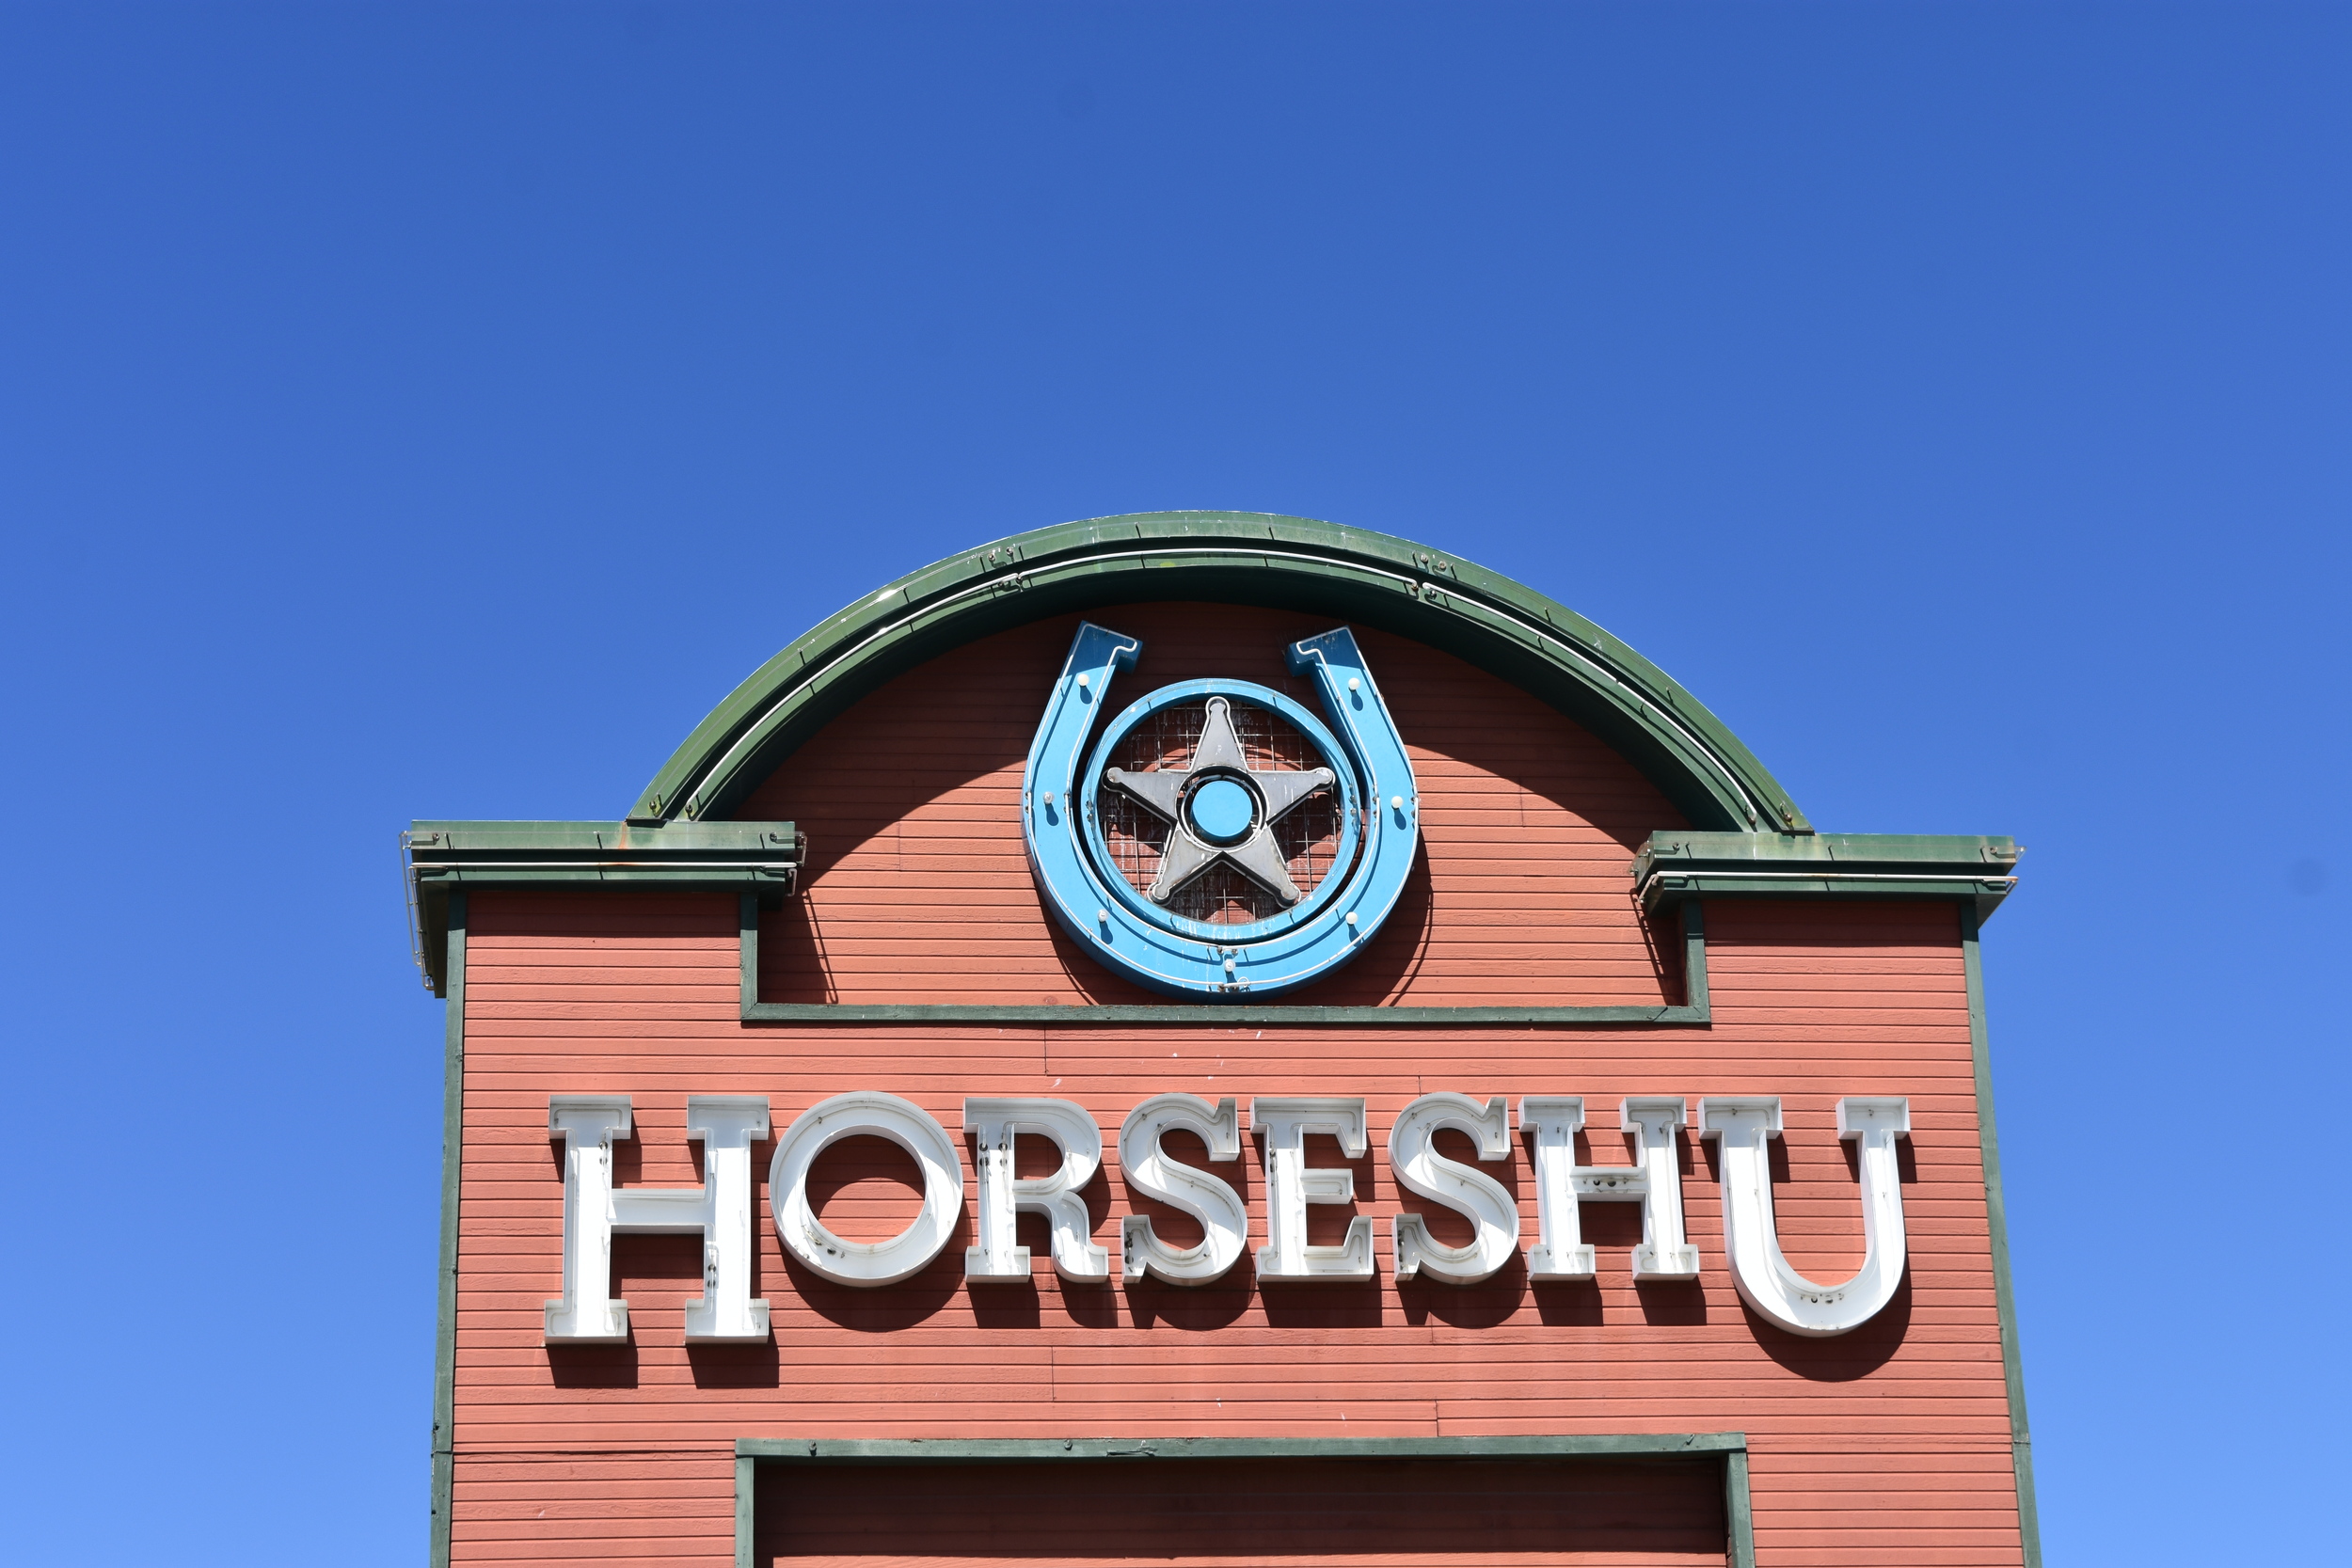 Horseshu Hotel & Casino double mounted sign, Jackpot, Nevada